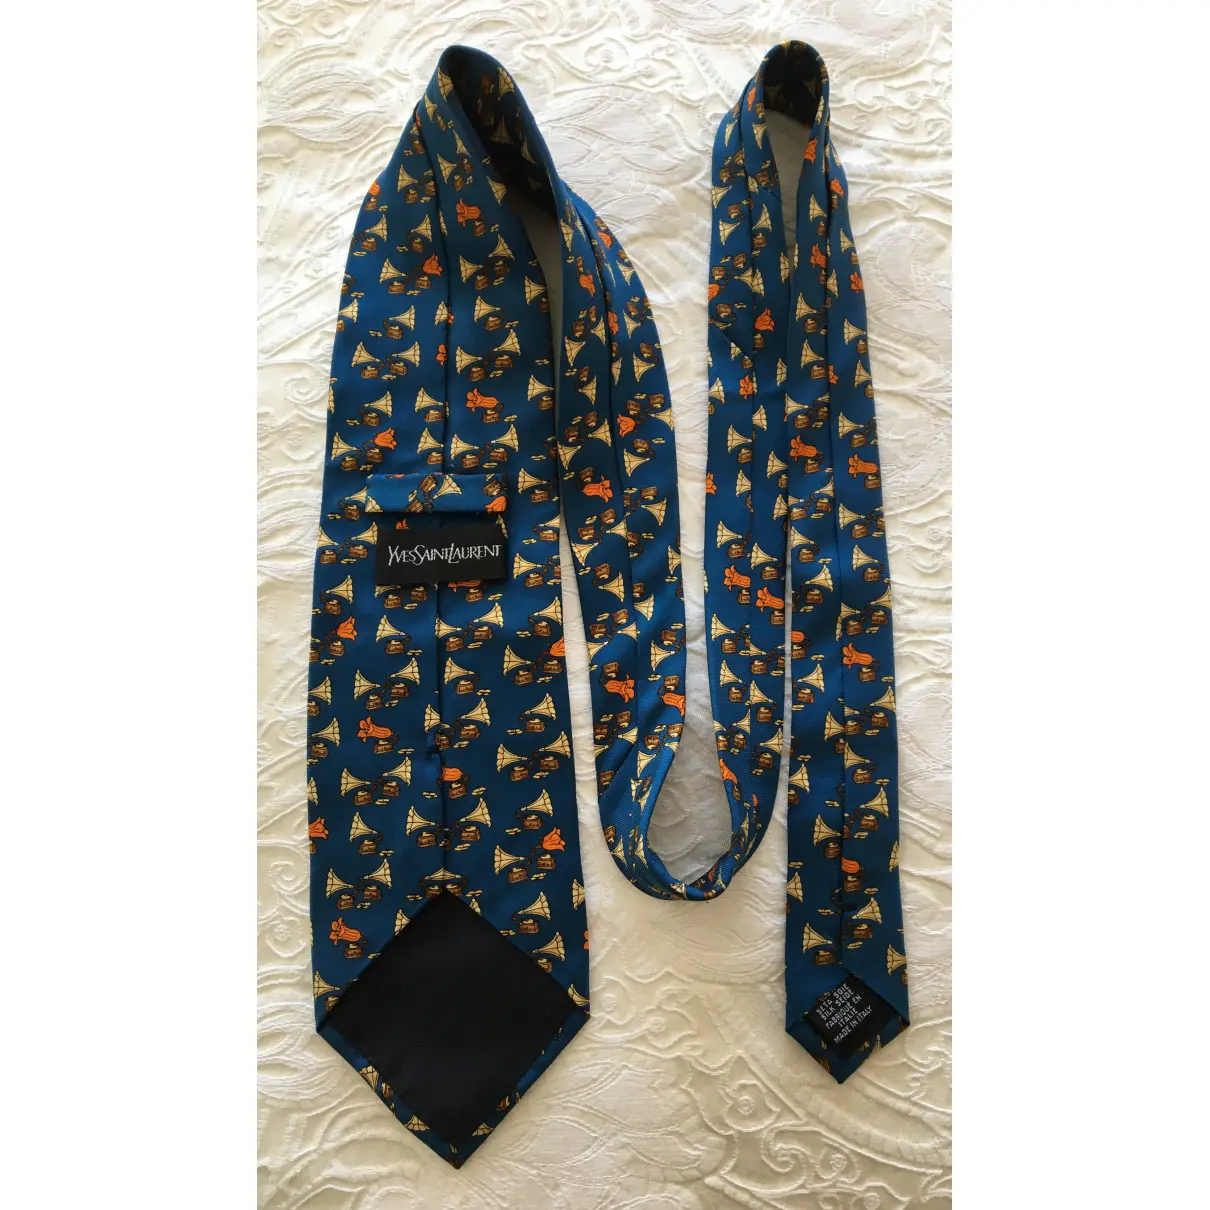 Buy Yves Saint Laurent Silk tie online